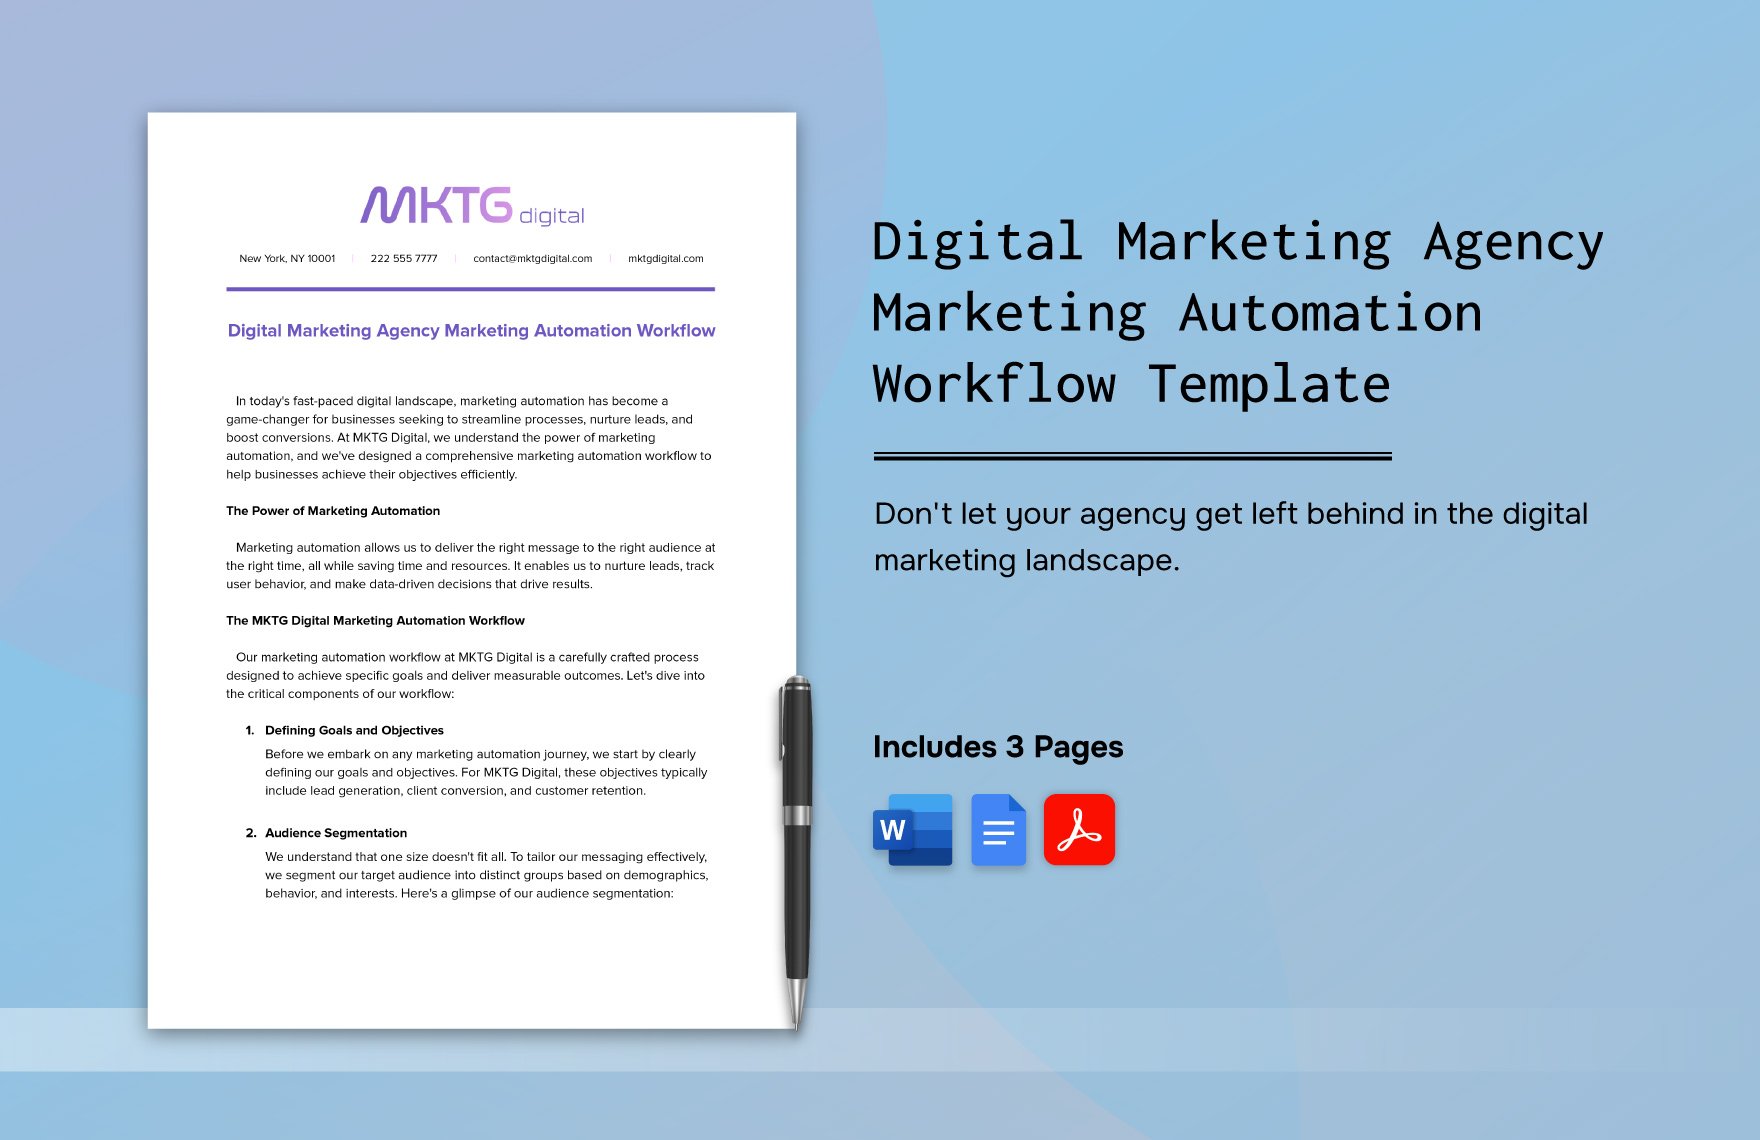 Digital Marketing Agency Marketing Automation Workflow Template